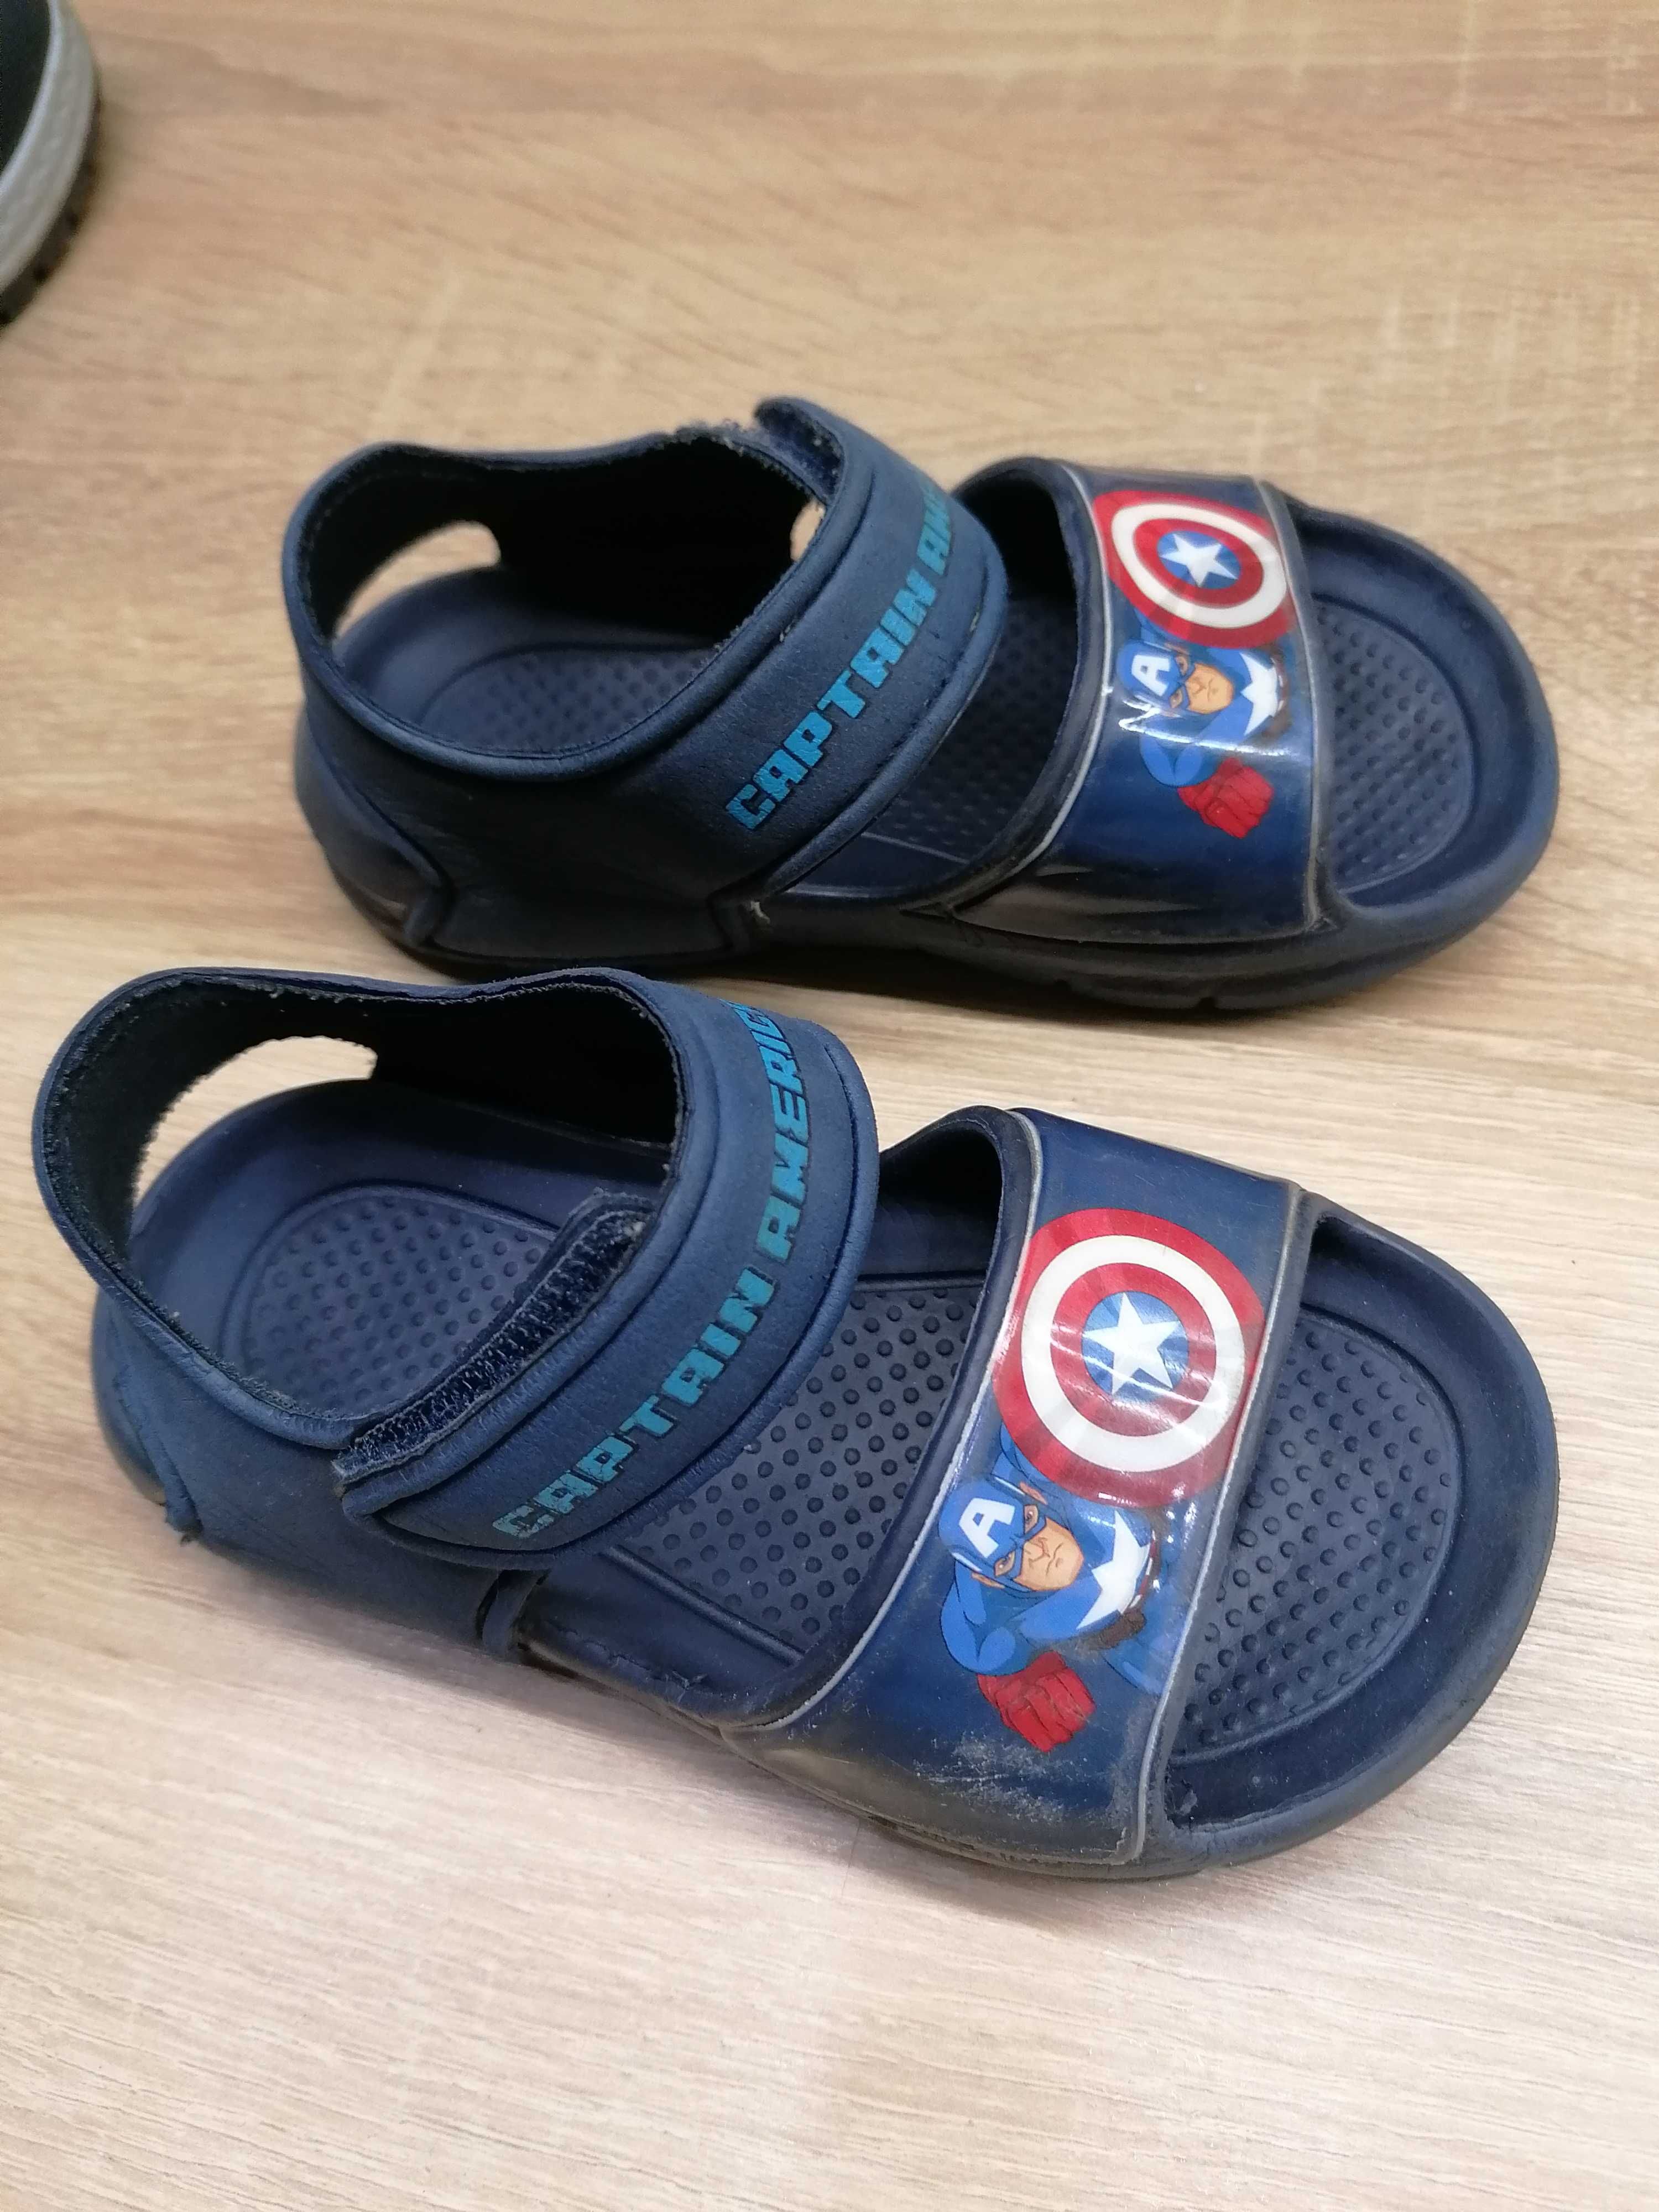 Sandałki Captain America rozmiar 25